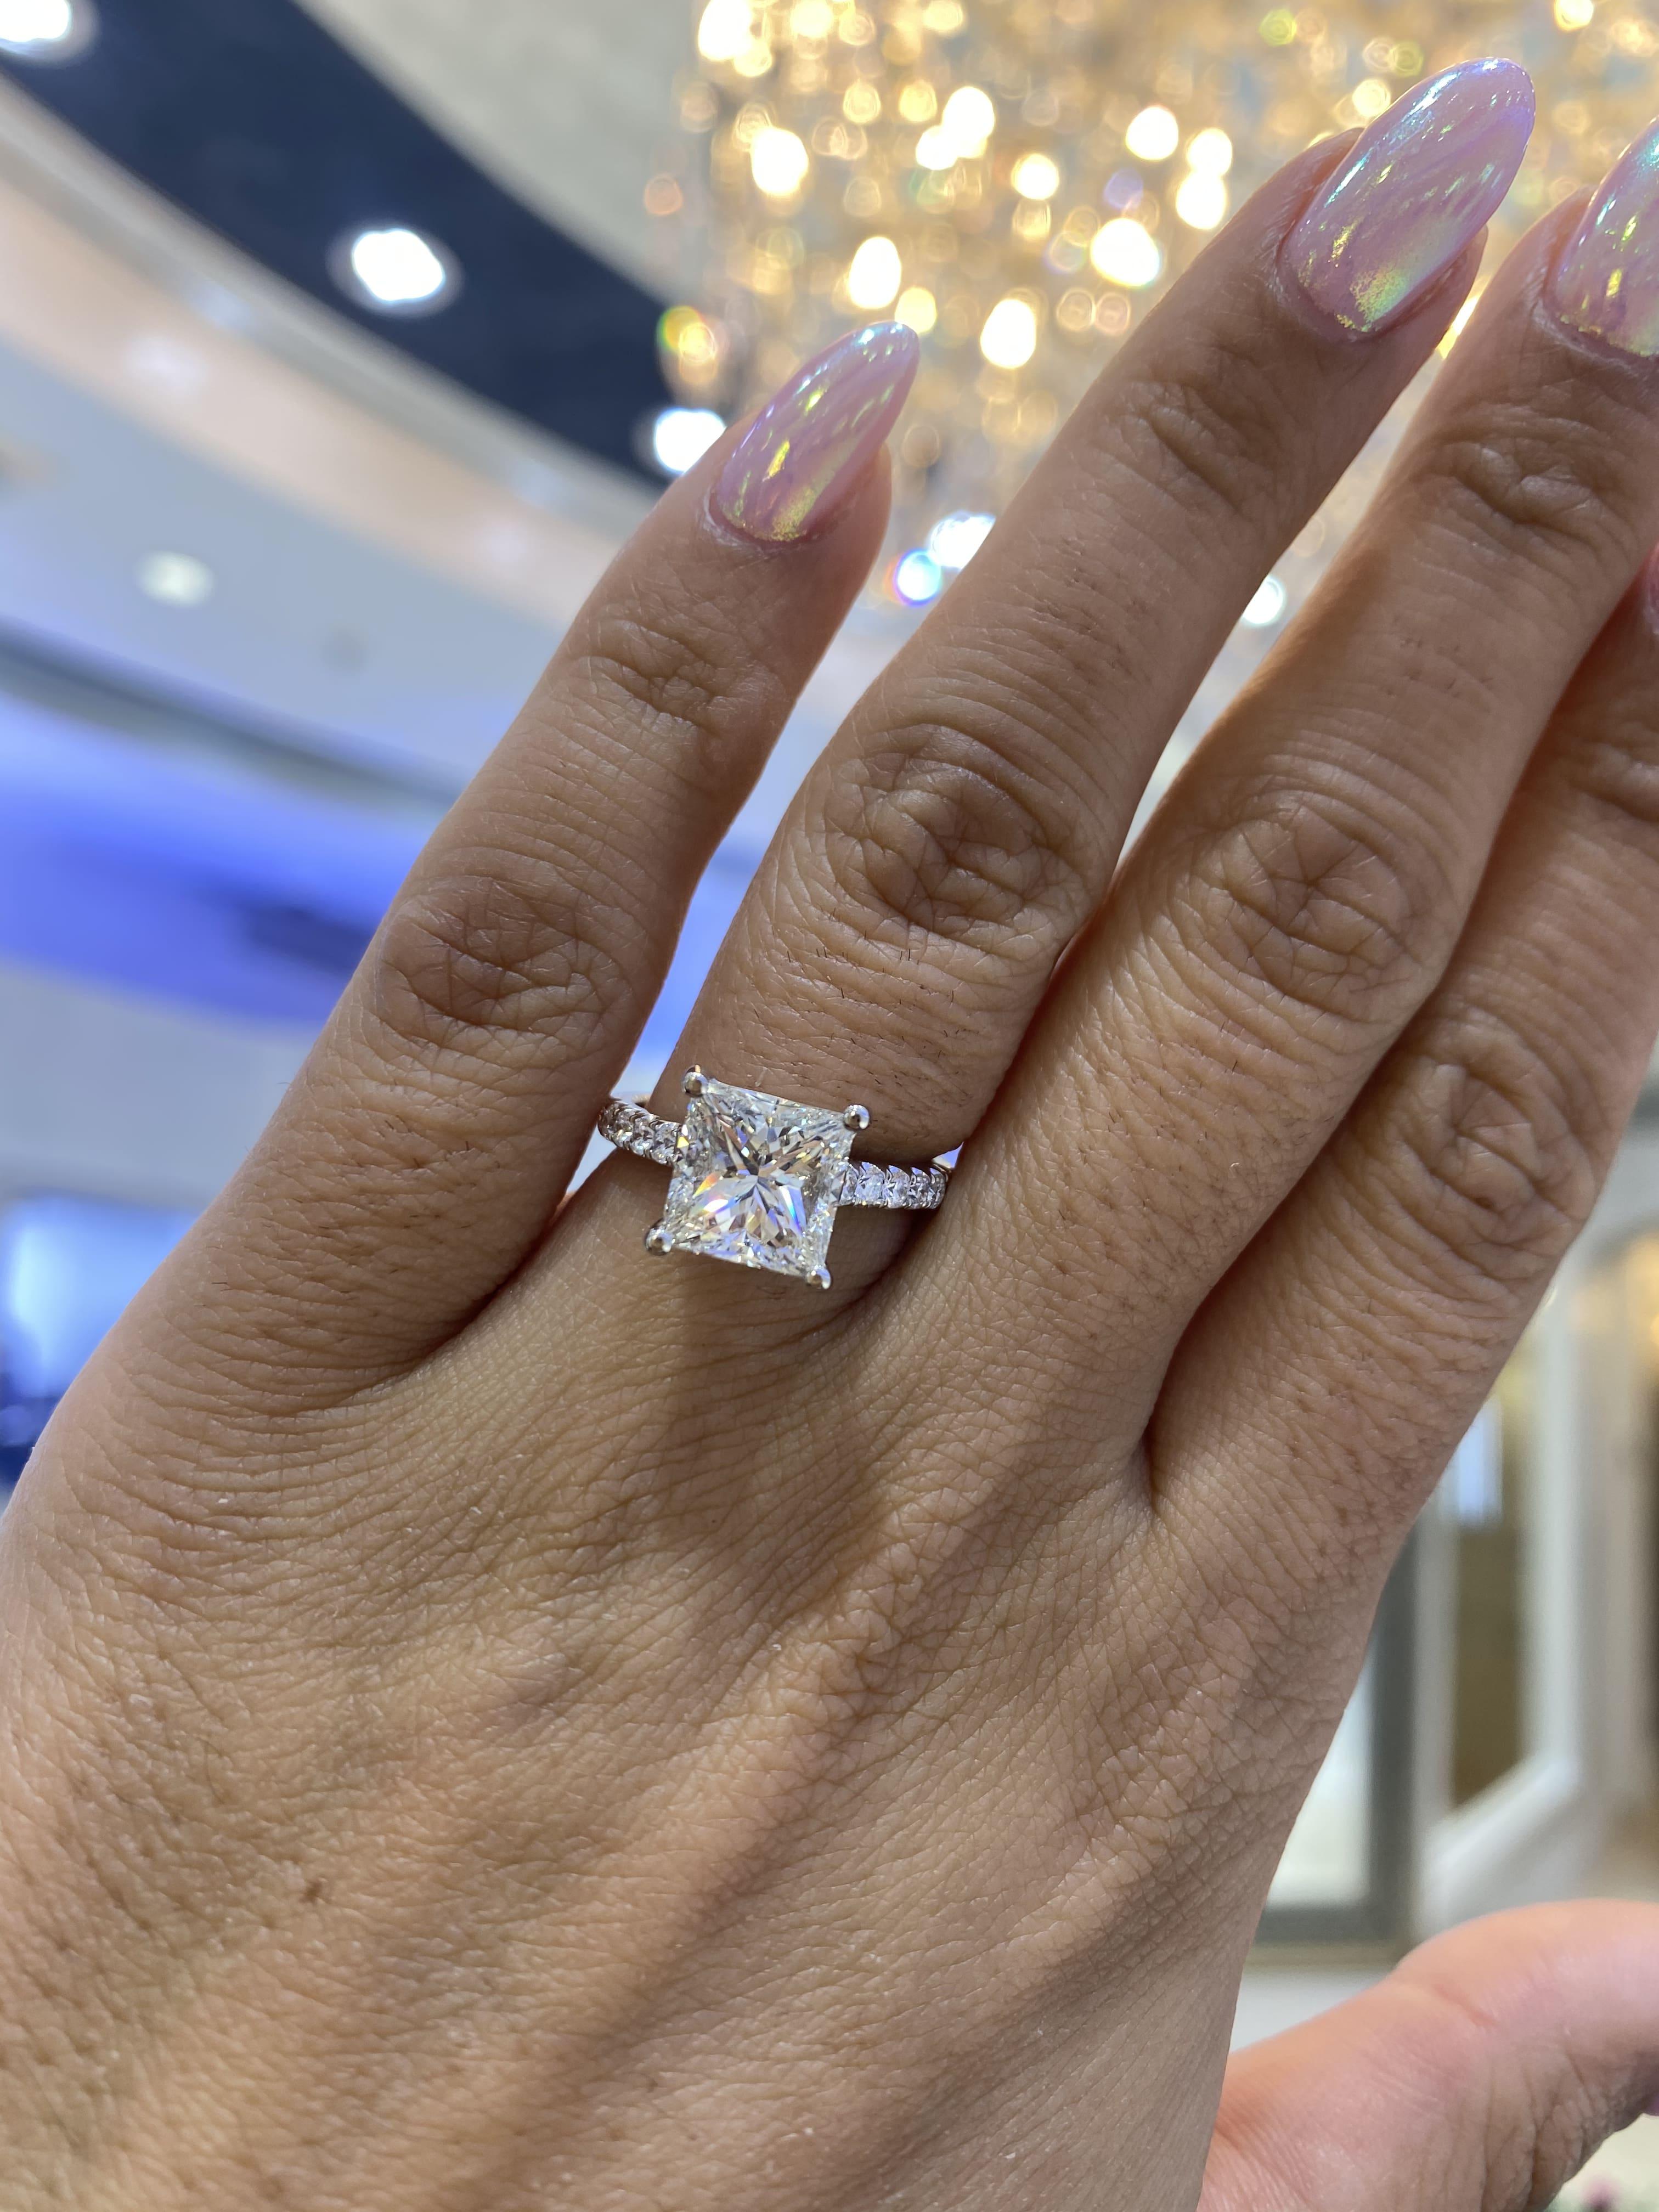 3 carat princess cut solitaire diamond ring kym mazelle